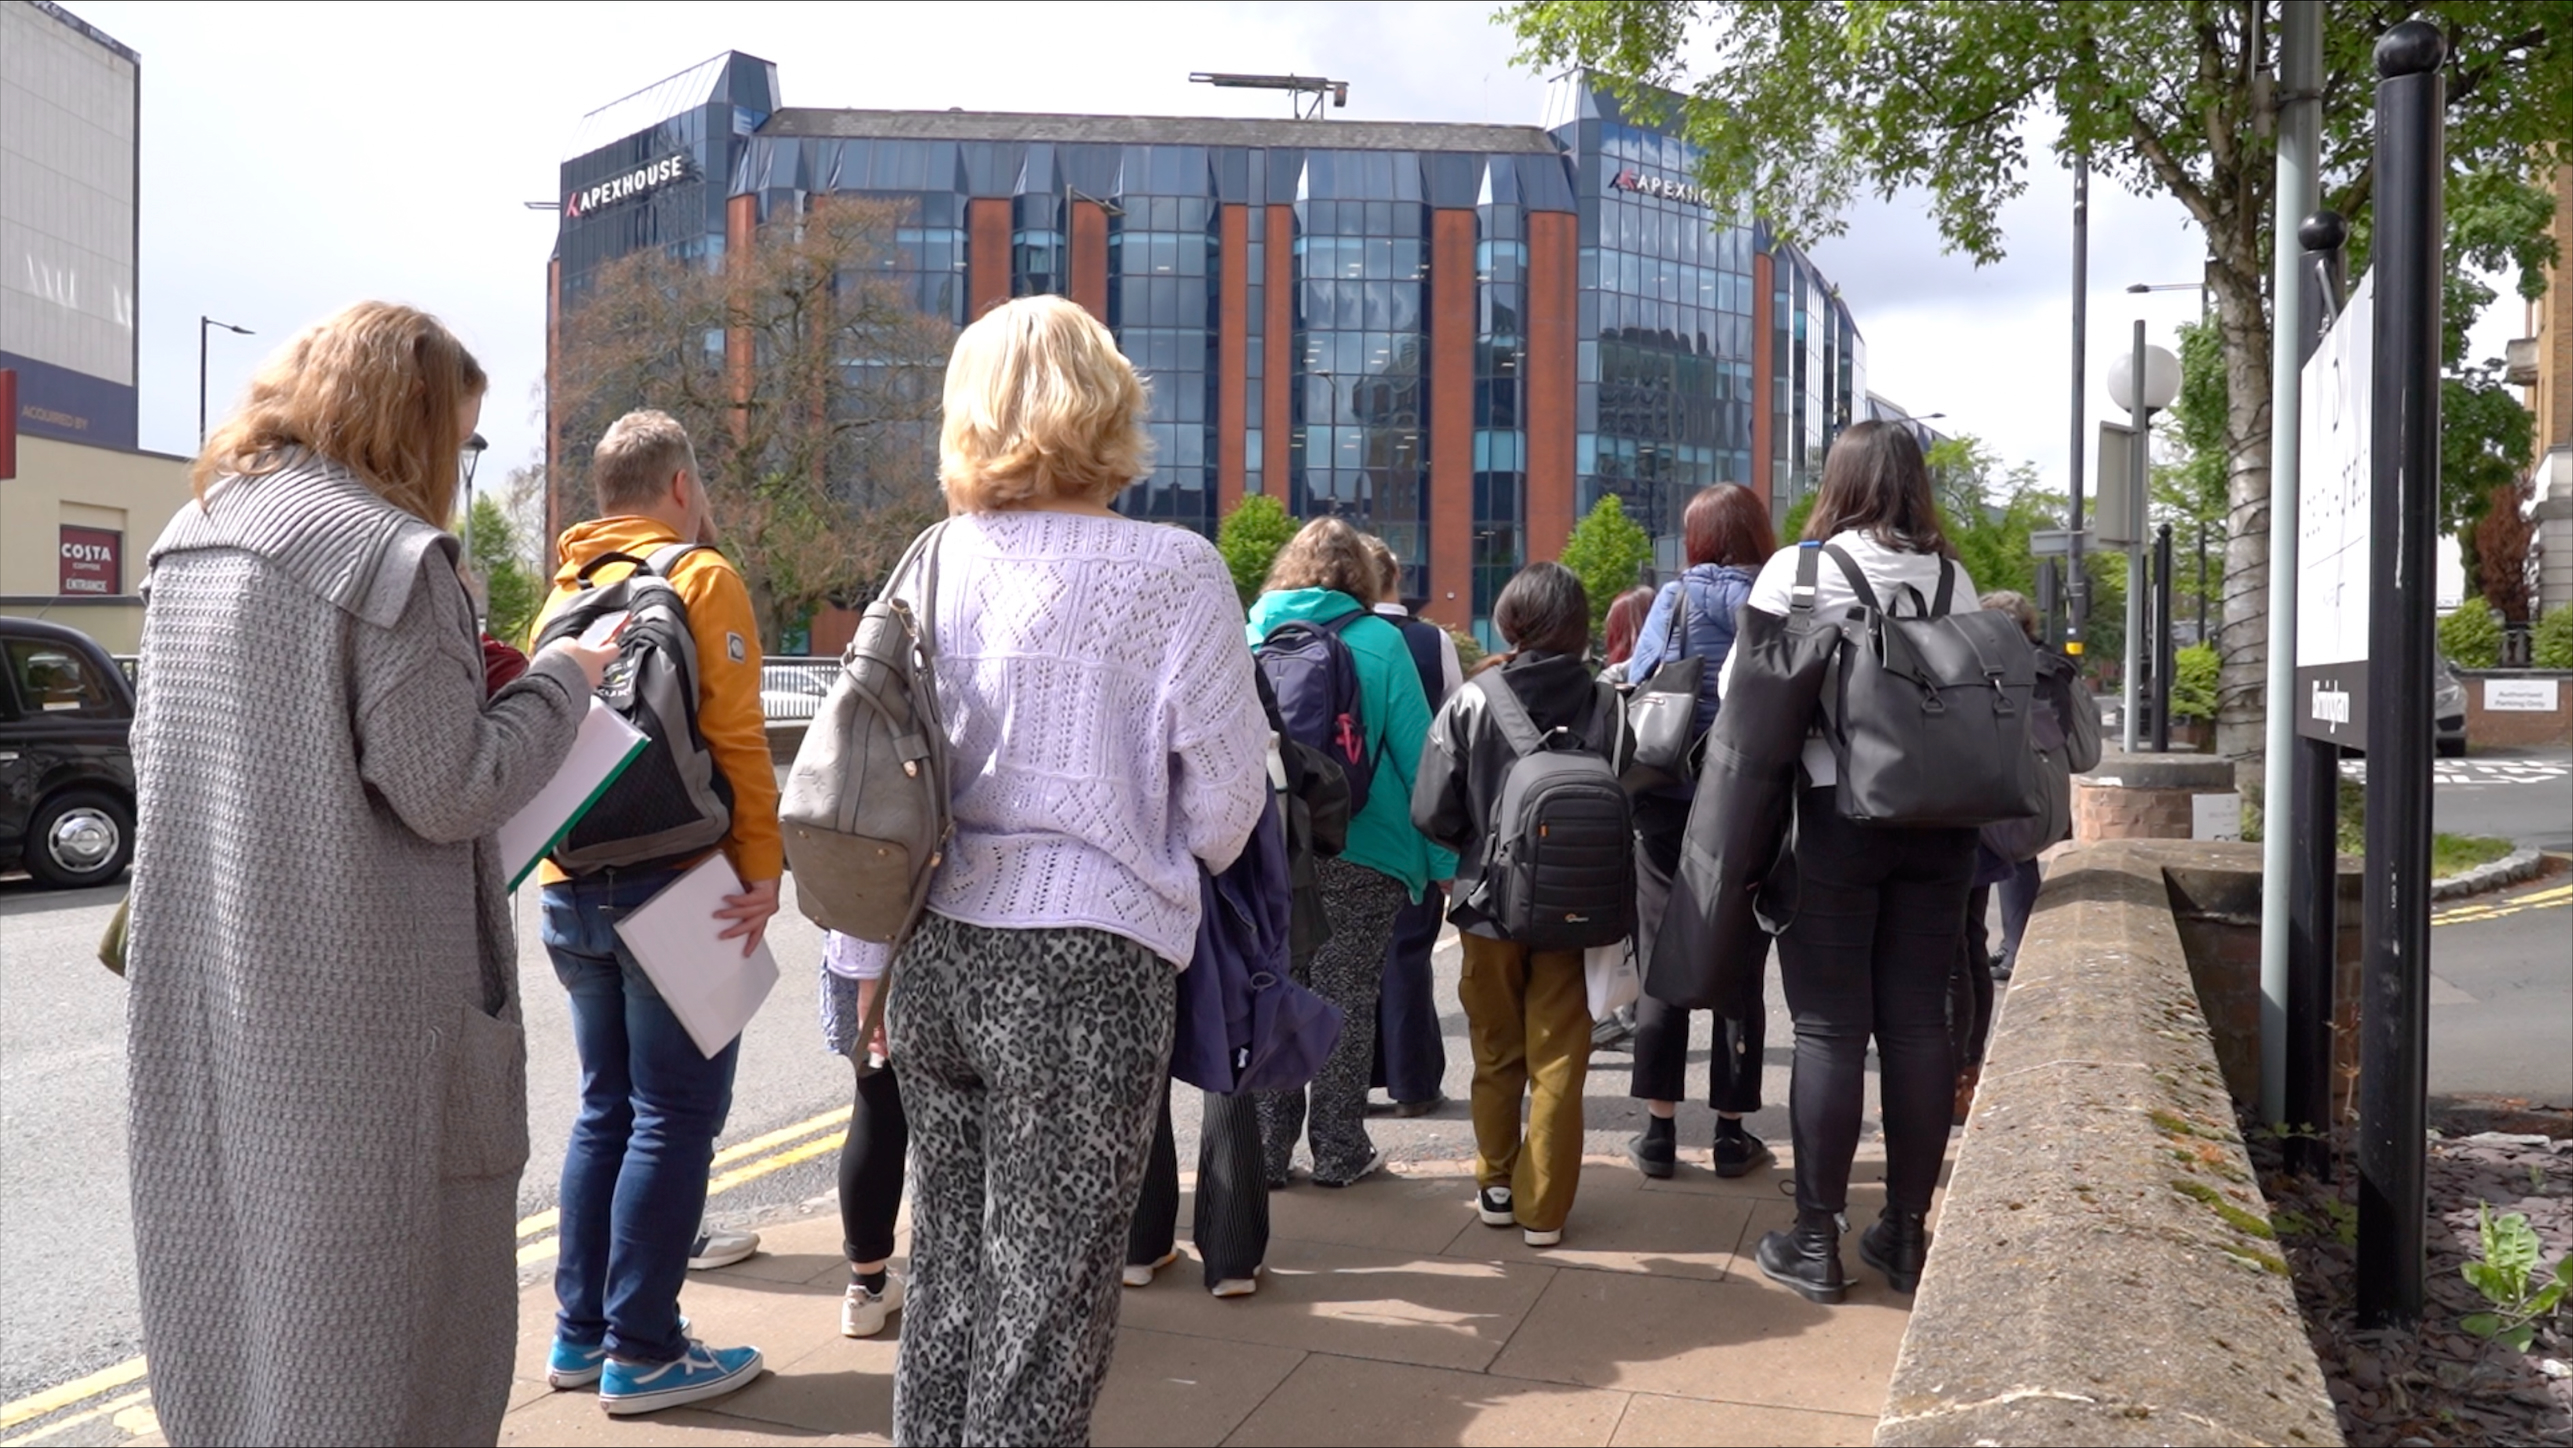 Workshop participants on a walking tour around Edgbaston, Birmingham.